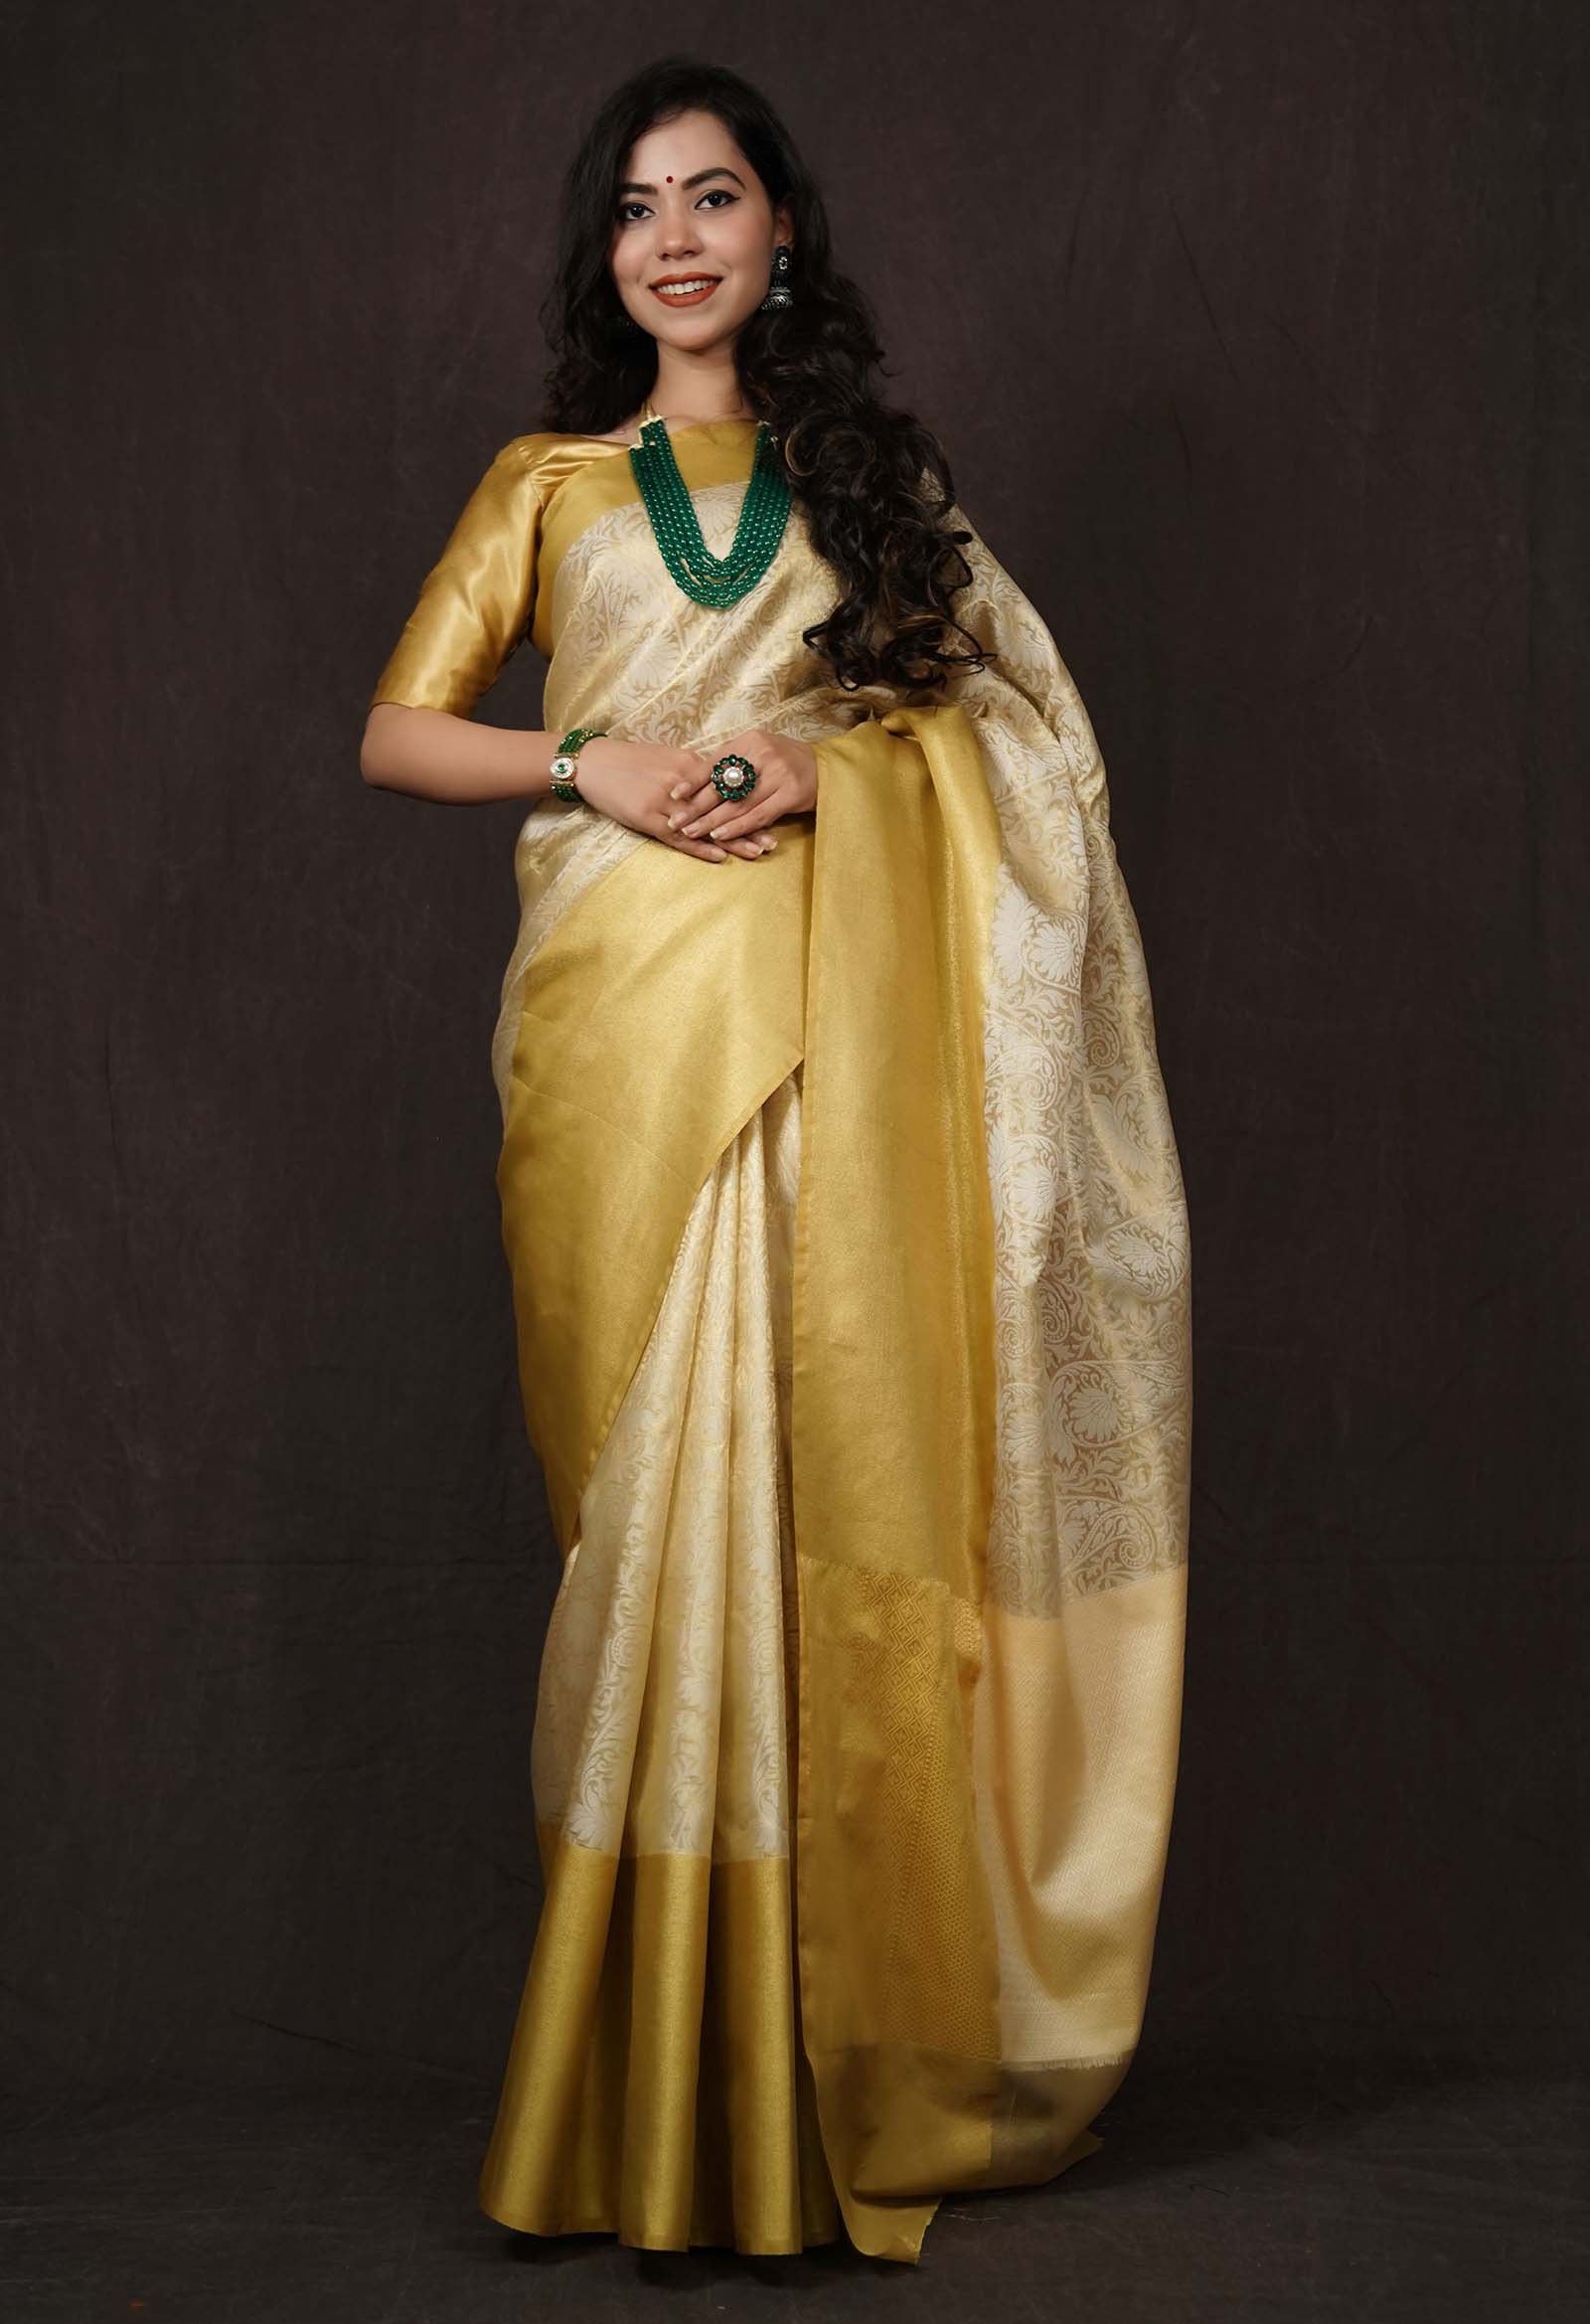 Mukesh Ambani's Wife Nita Ambani Styles Ivory-Gold Saree, Matching Blouse  For US State Dinner With Precious Pearls | Zoom TV